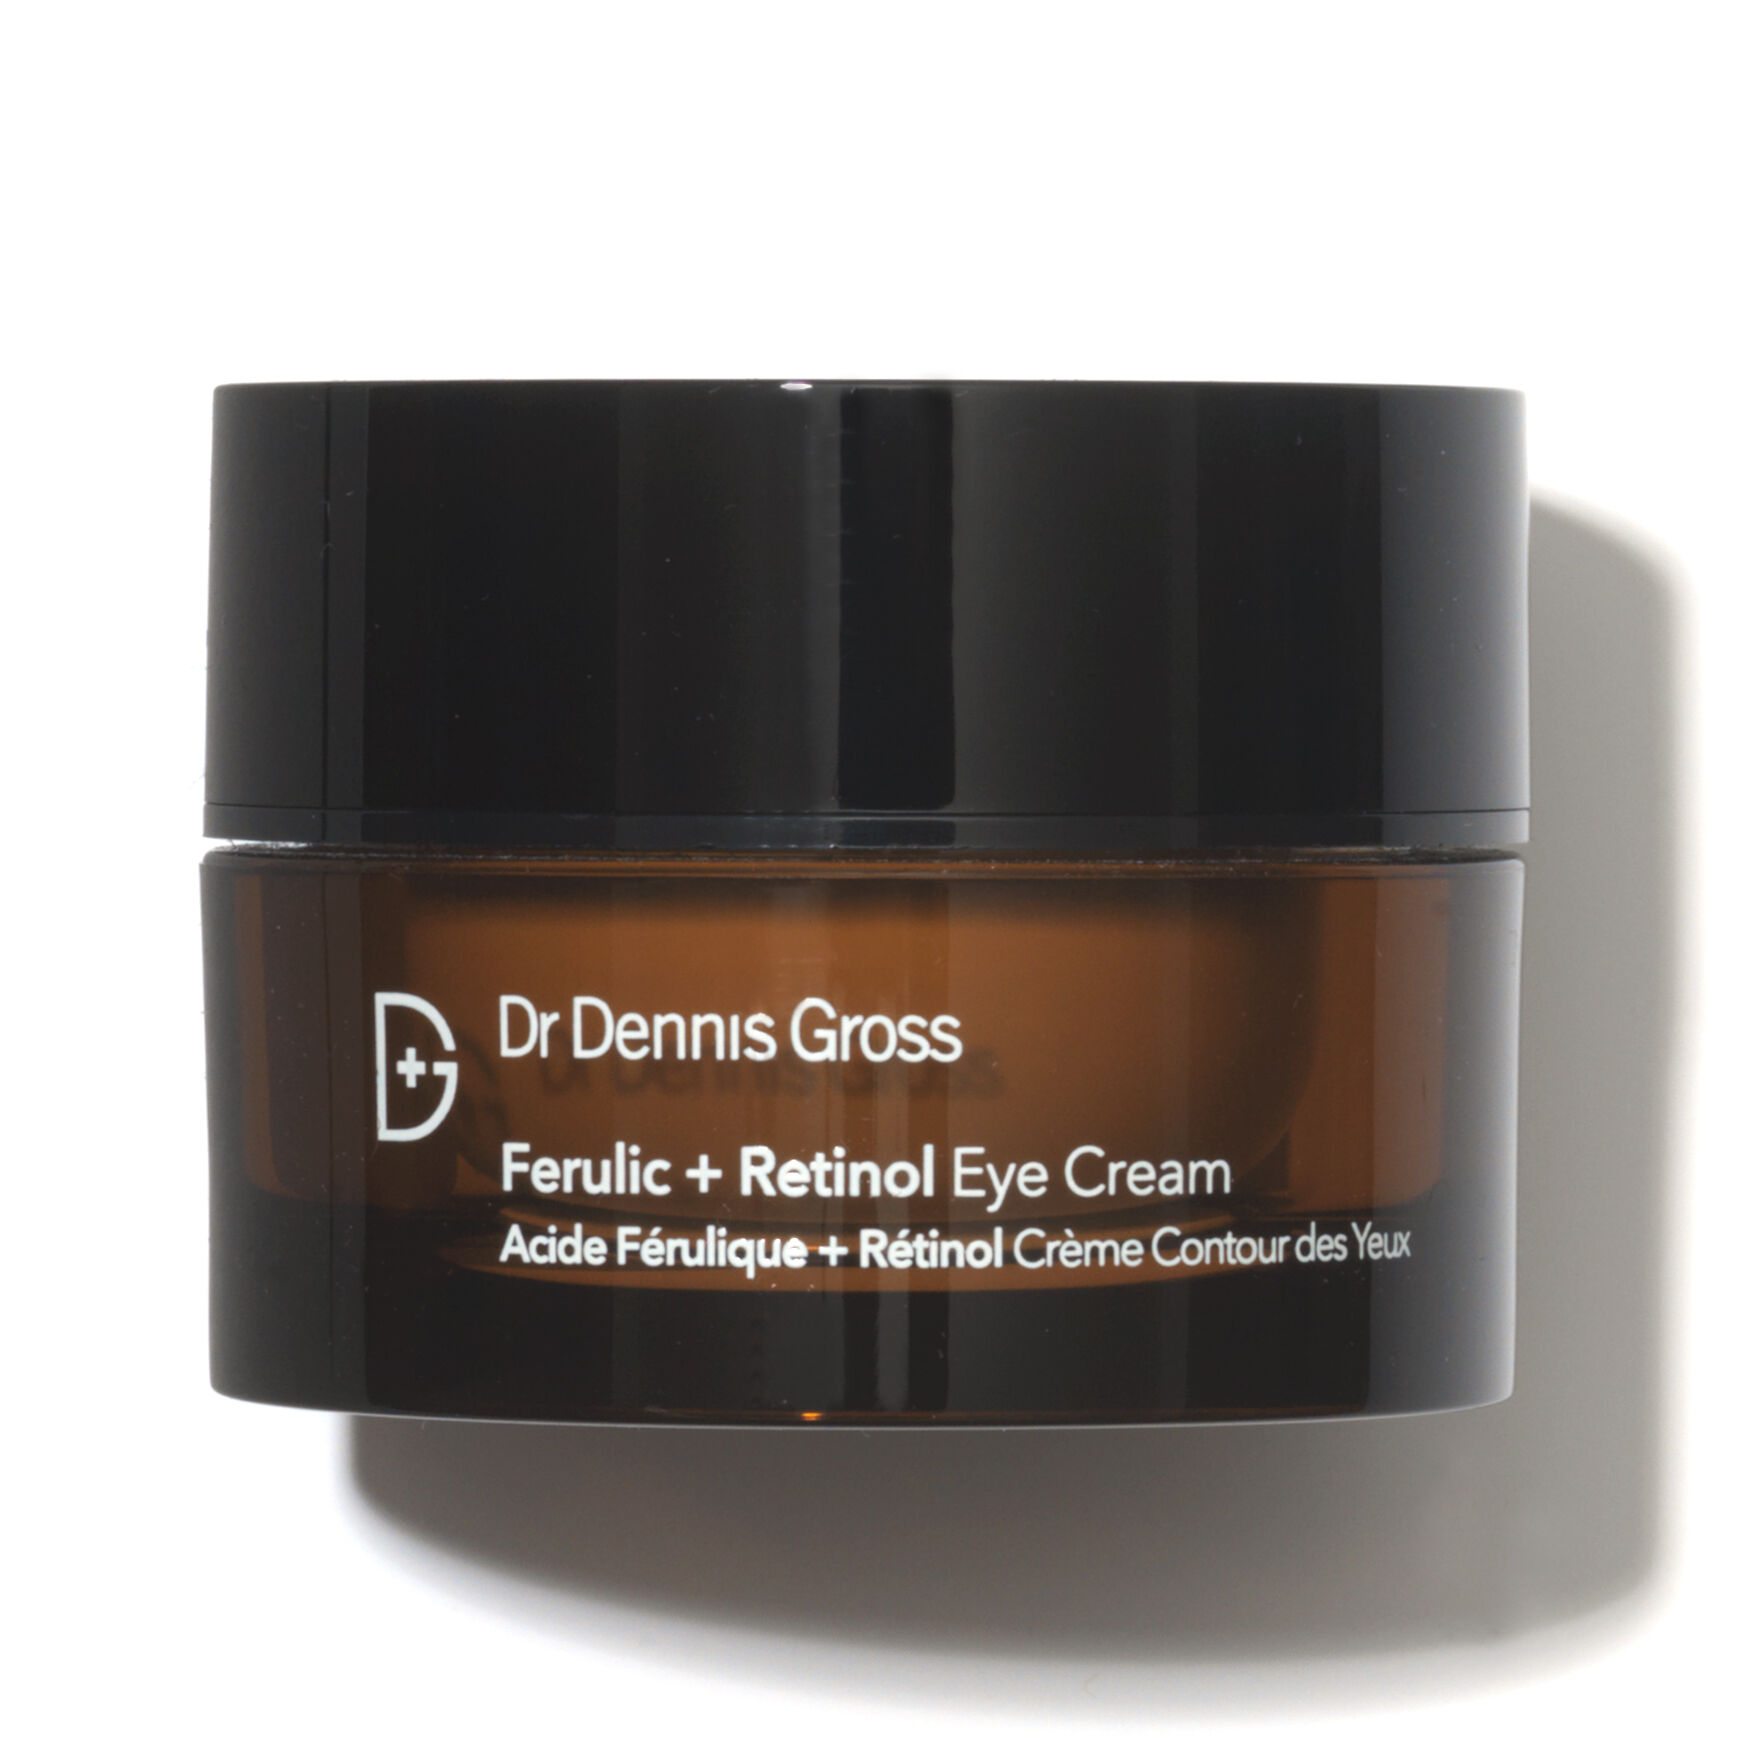 Dr Dennis Gross - Ferulic + Retinol Eye Cream by Dr Dennis Gross